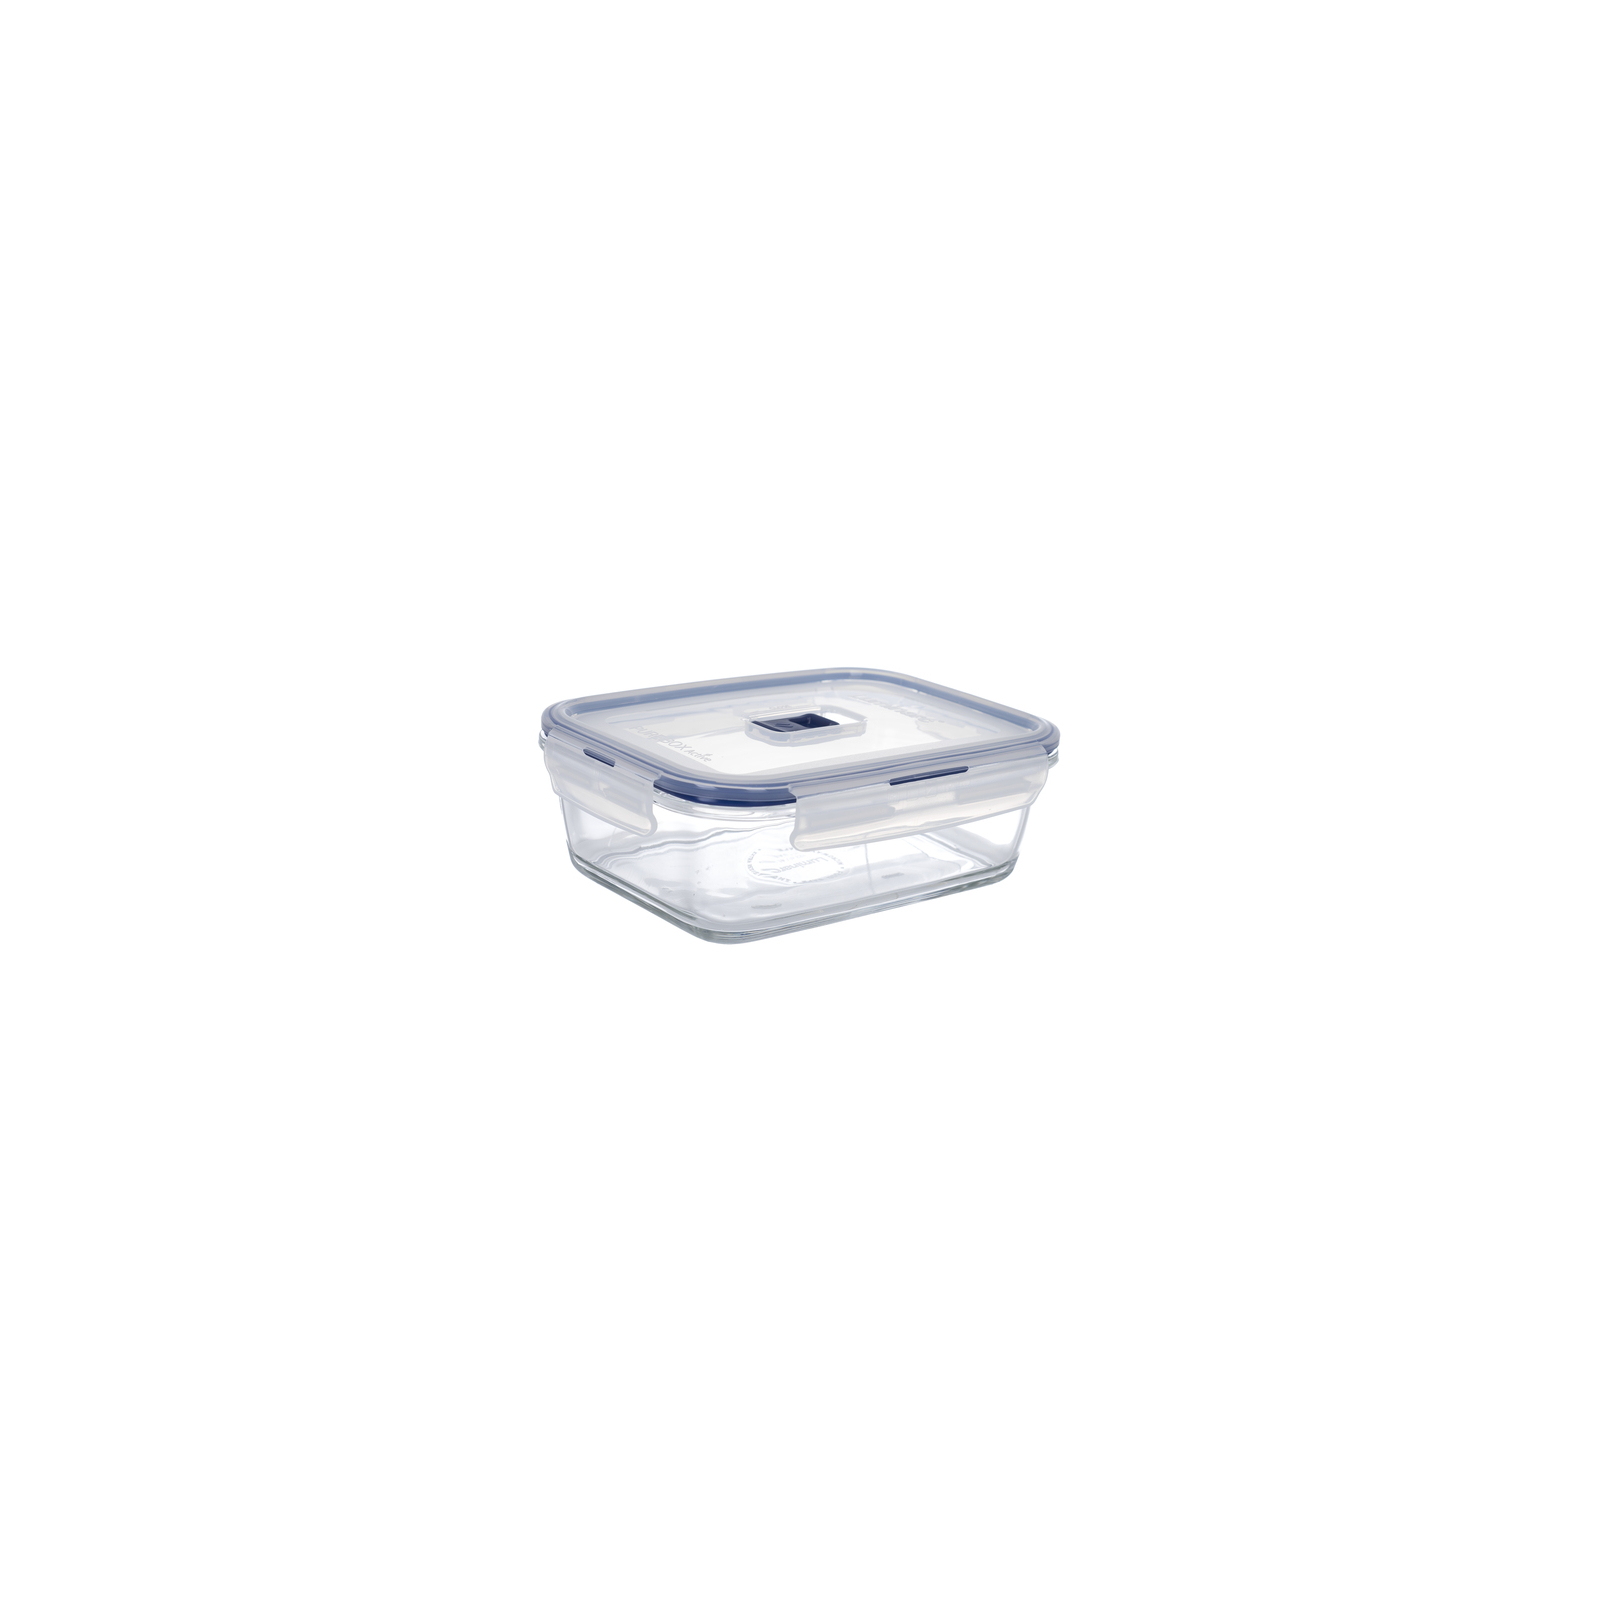 Харчовий контейнер Luminarc Pure Box Active набор 3шт прямоуг. 380мл/820мл/1220мл + сумк (P4129) зображення 2